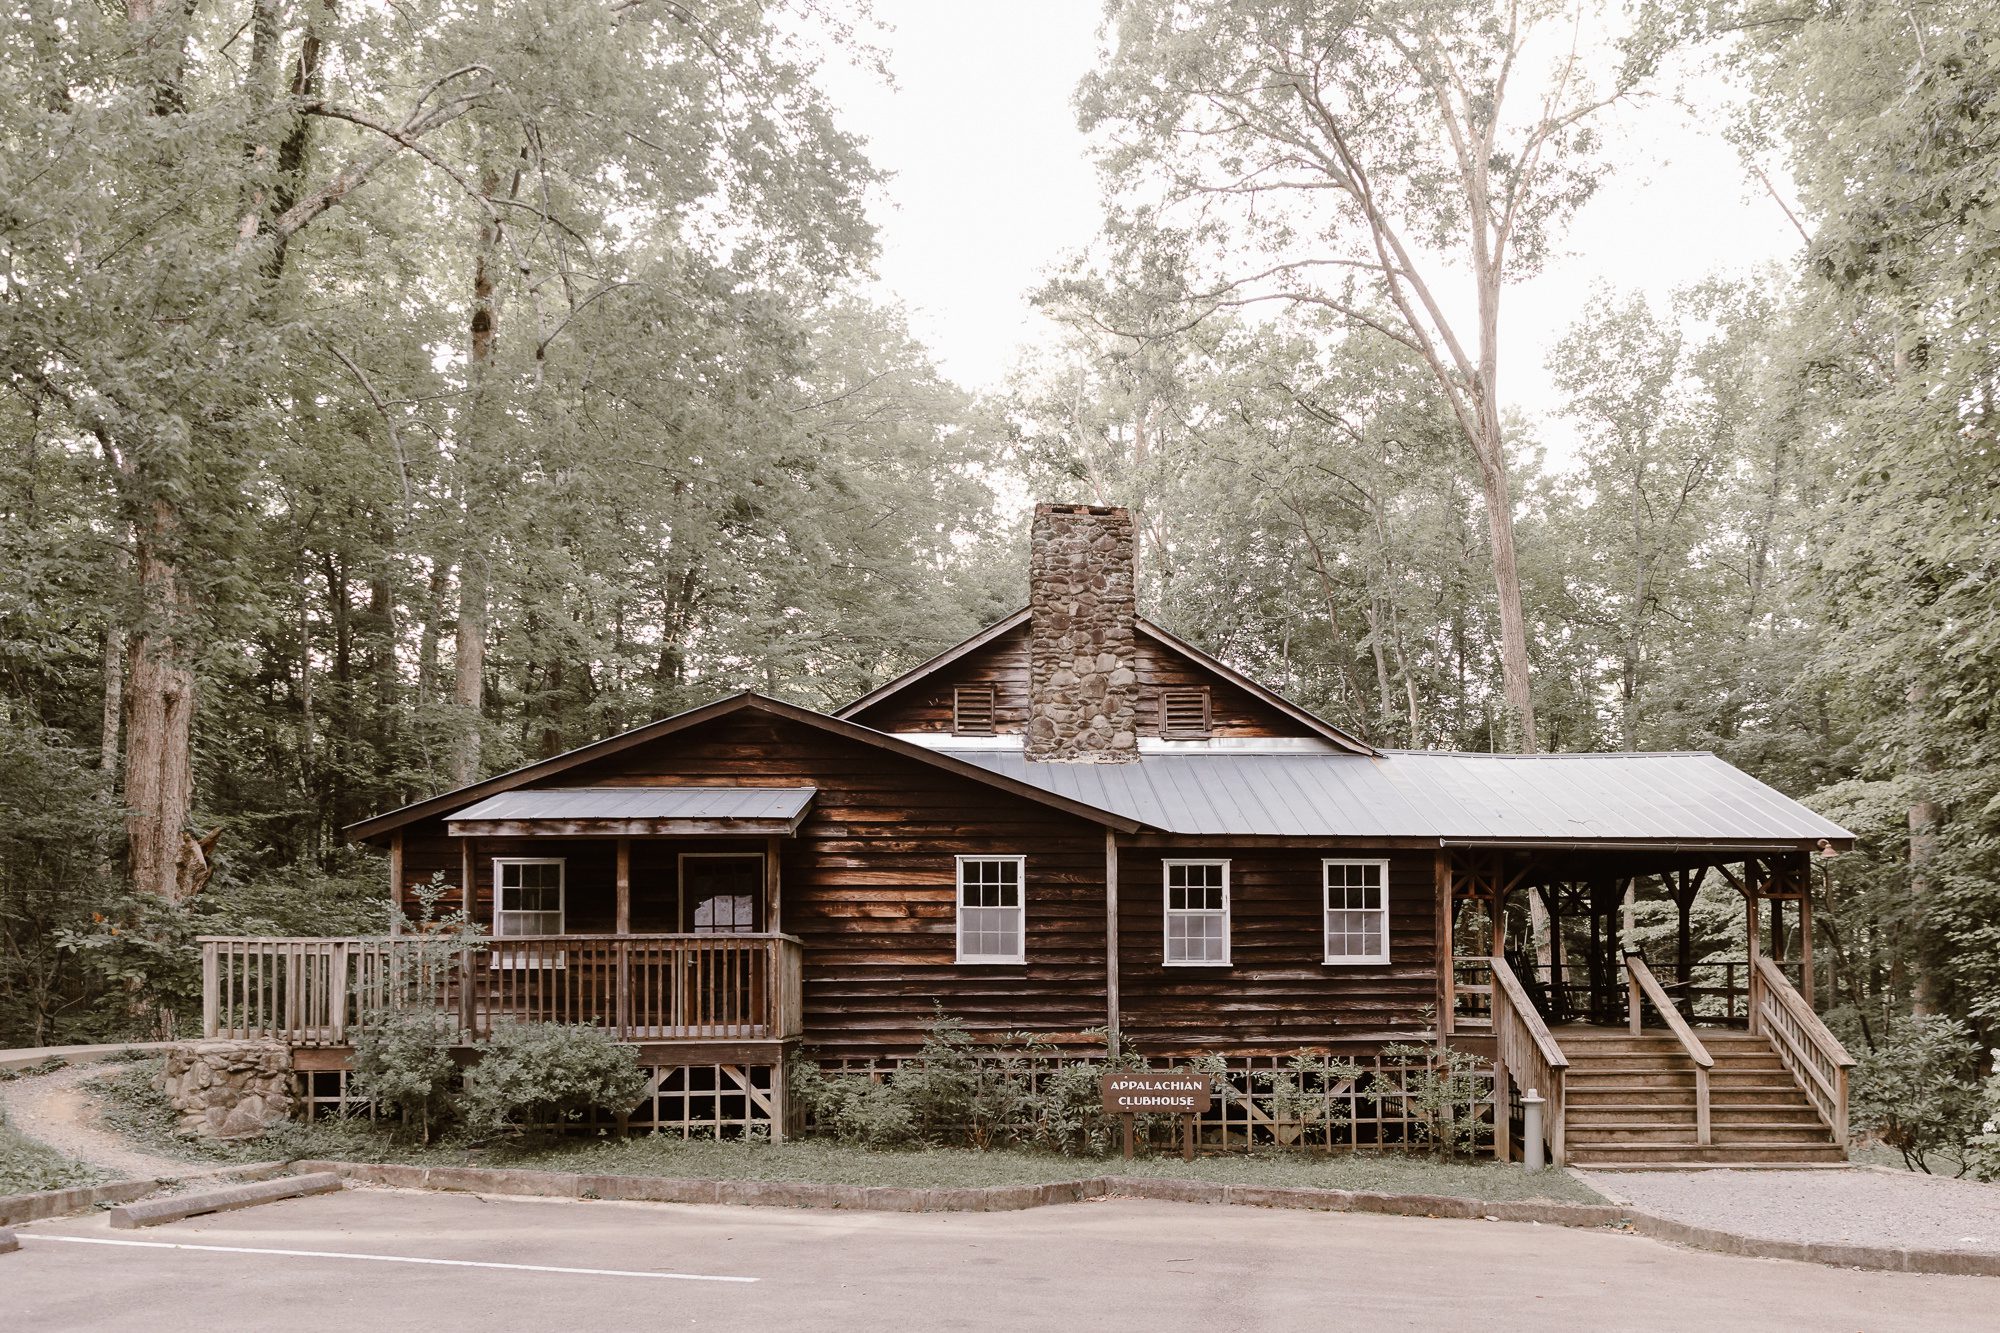 Appalachian Clubhouse in The Smokies